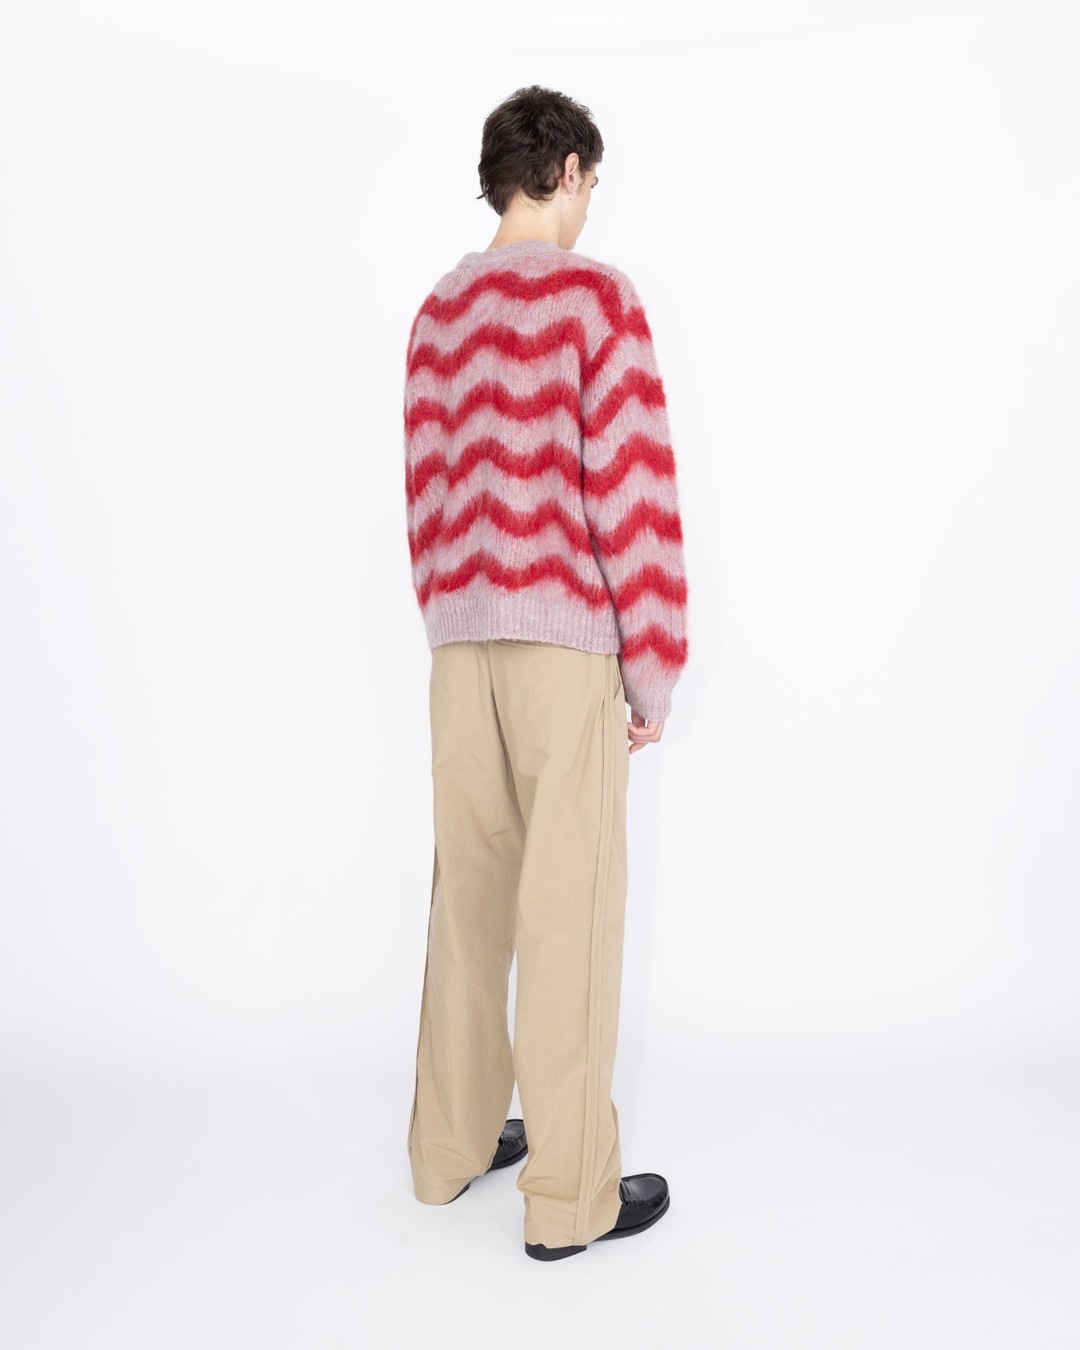 Highsnobiety HS05 – Alpaca Fuzzy Wave Sweater Pale Rose/Red - Knitwear - Multi - Image 5